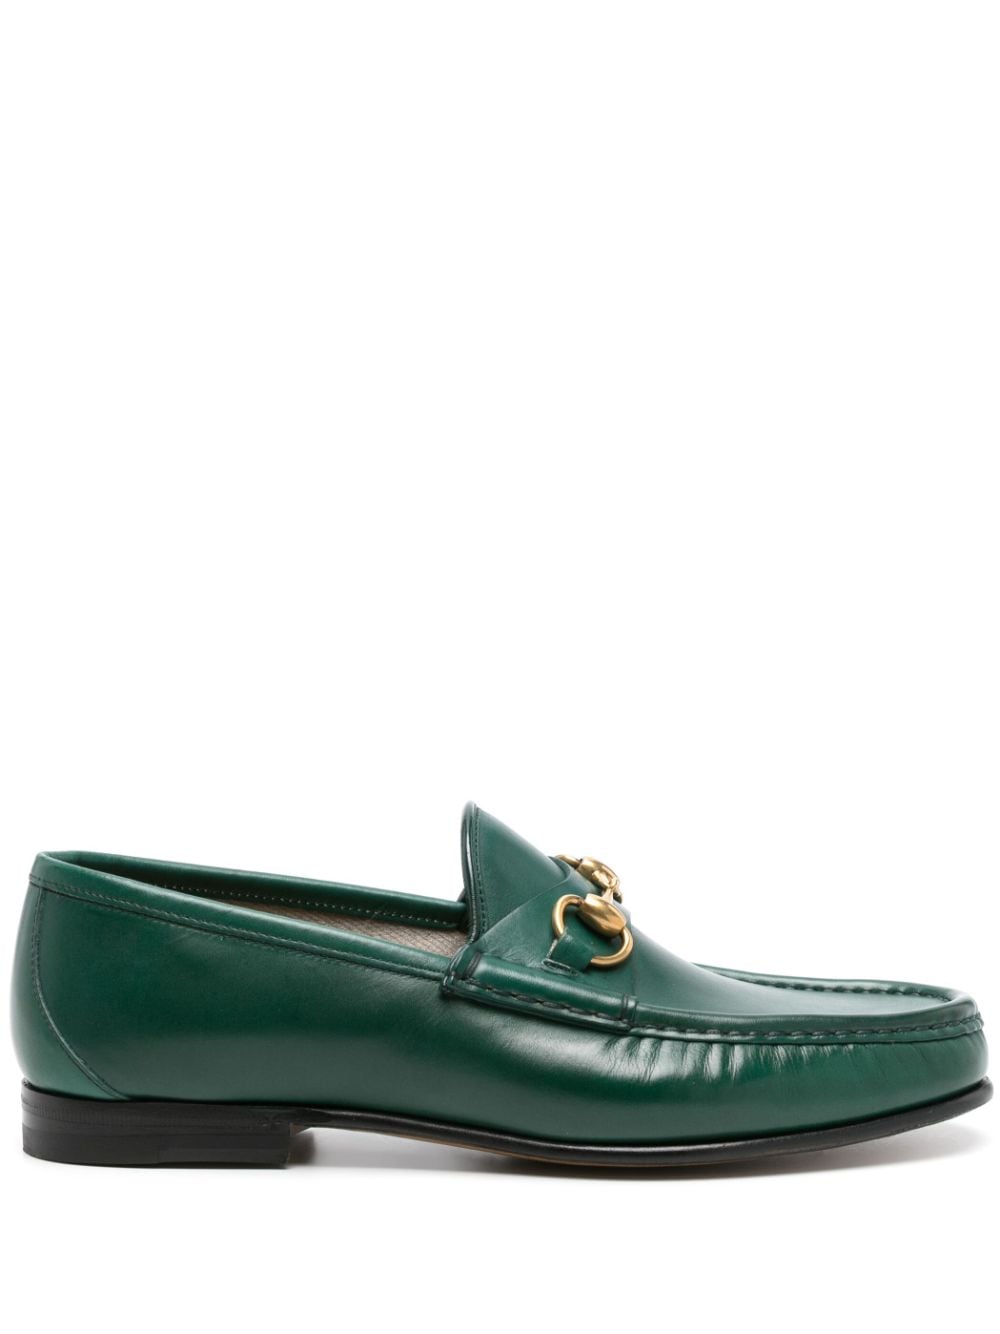 Gucci Horsebit 1953 leather loafers - Green von Gucci